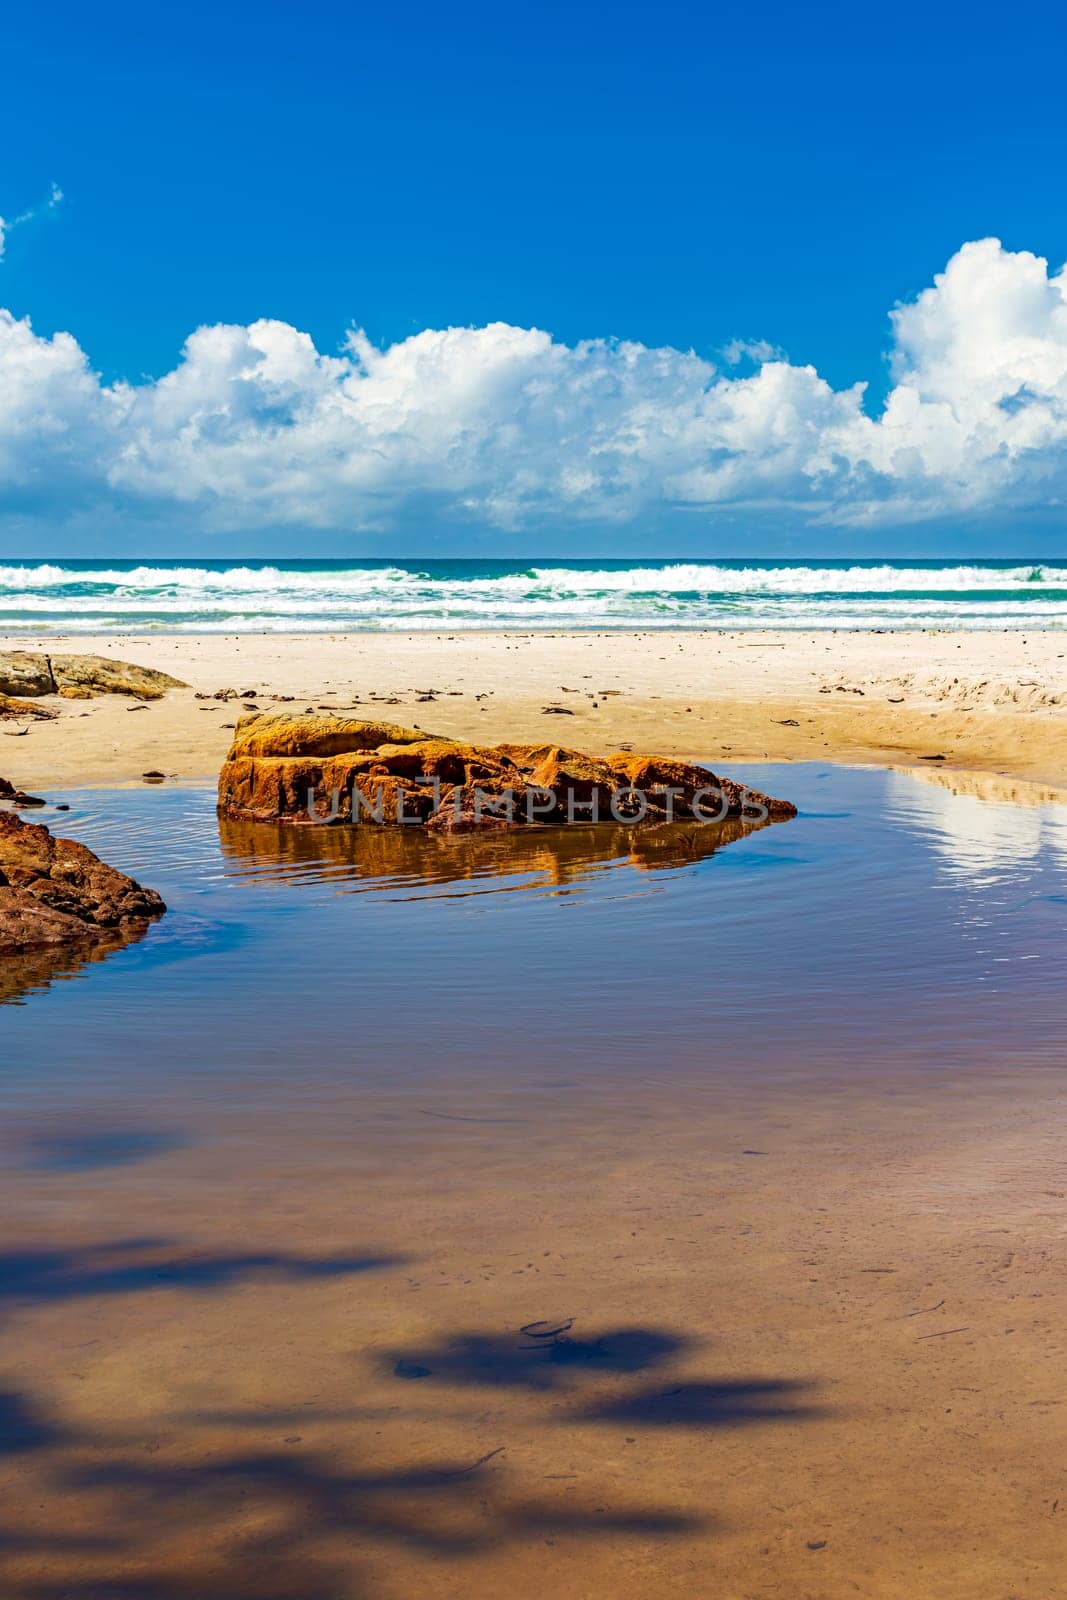 Paradisiacal beach in Bahia by Fred_Pinheiro